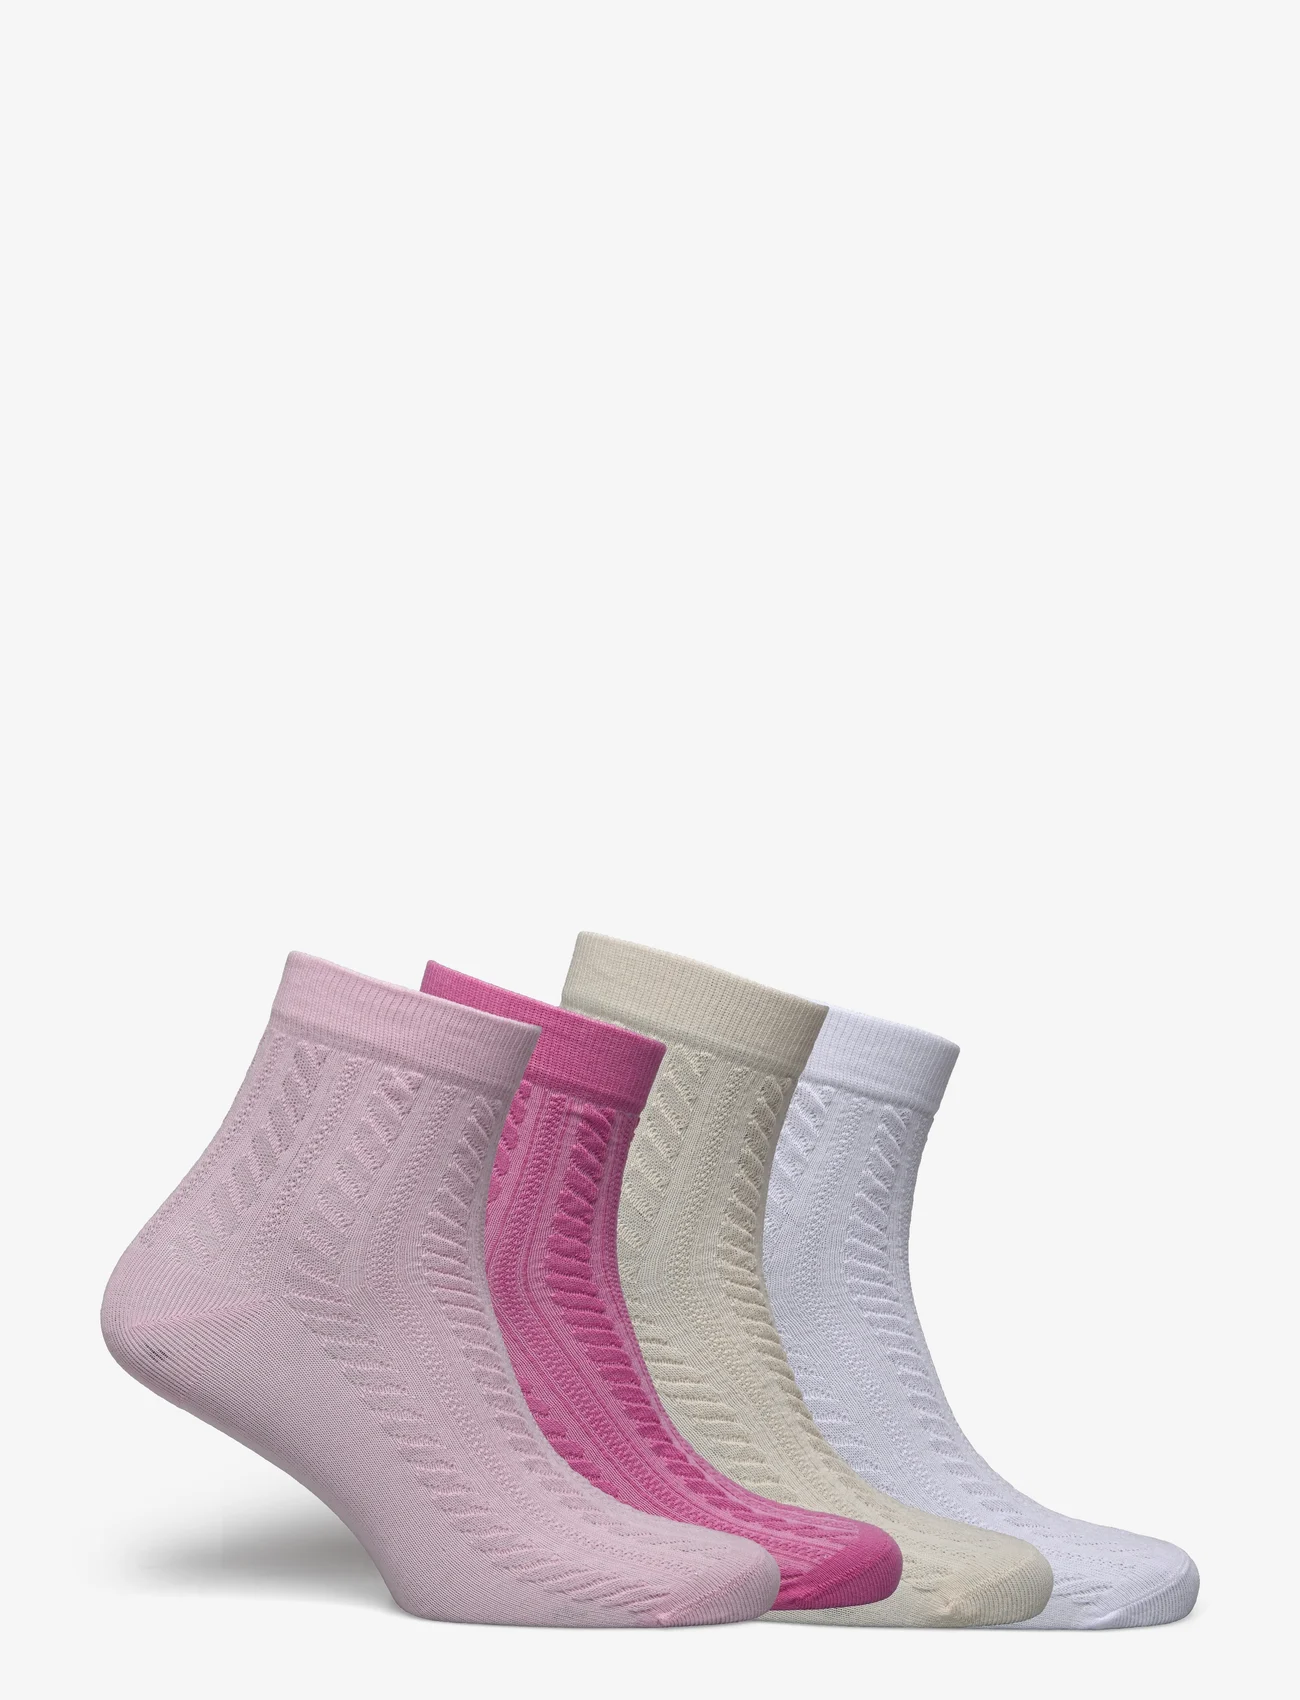 Lindex - sock high ankle 4 p soft cable - lägsta priserna - pink - 1